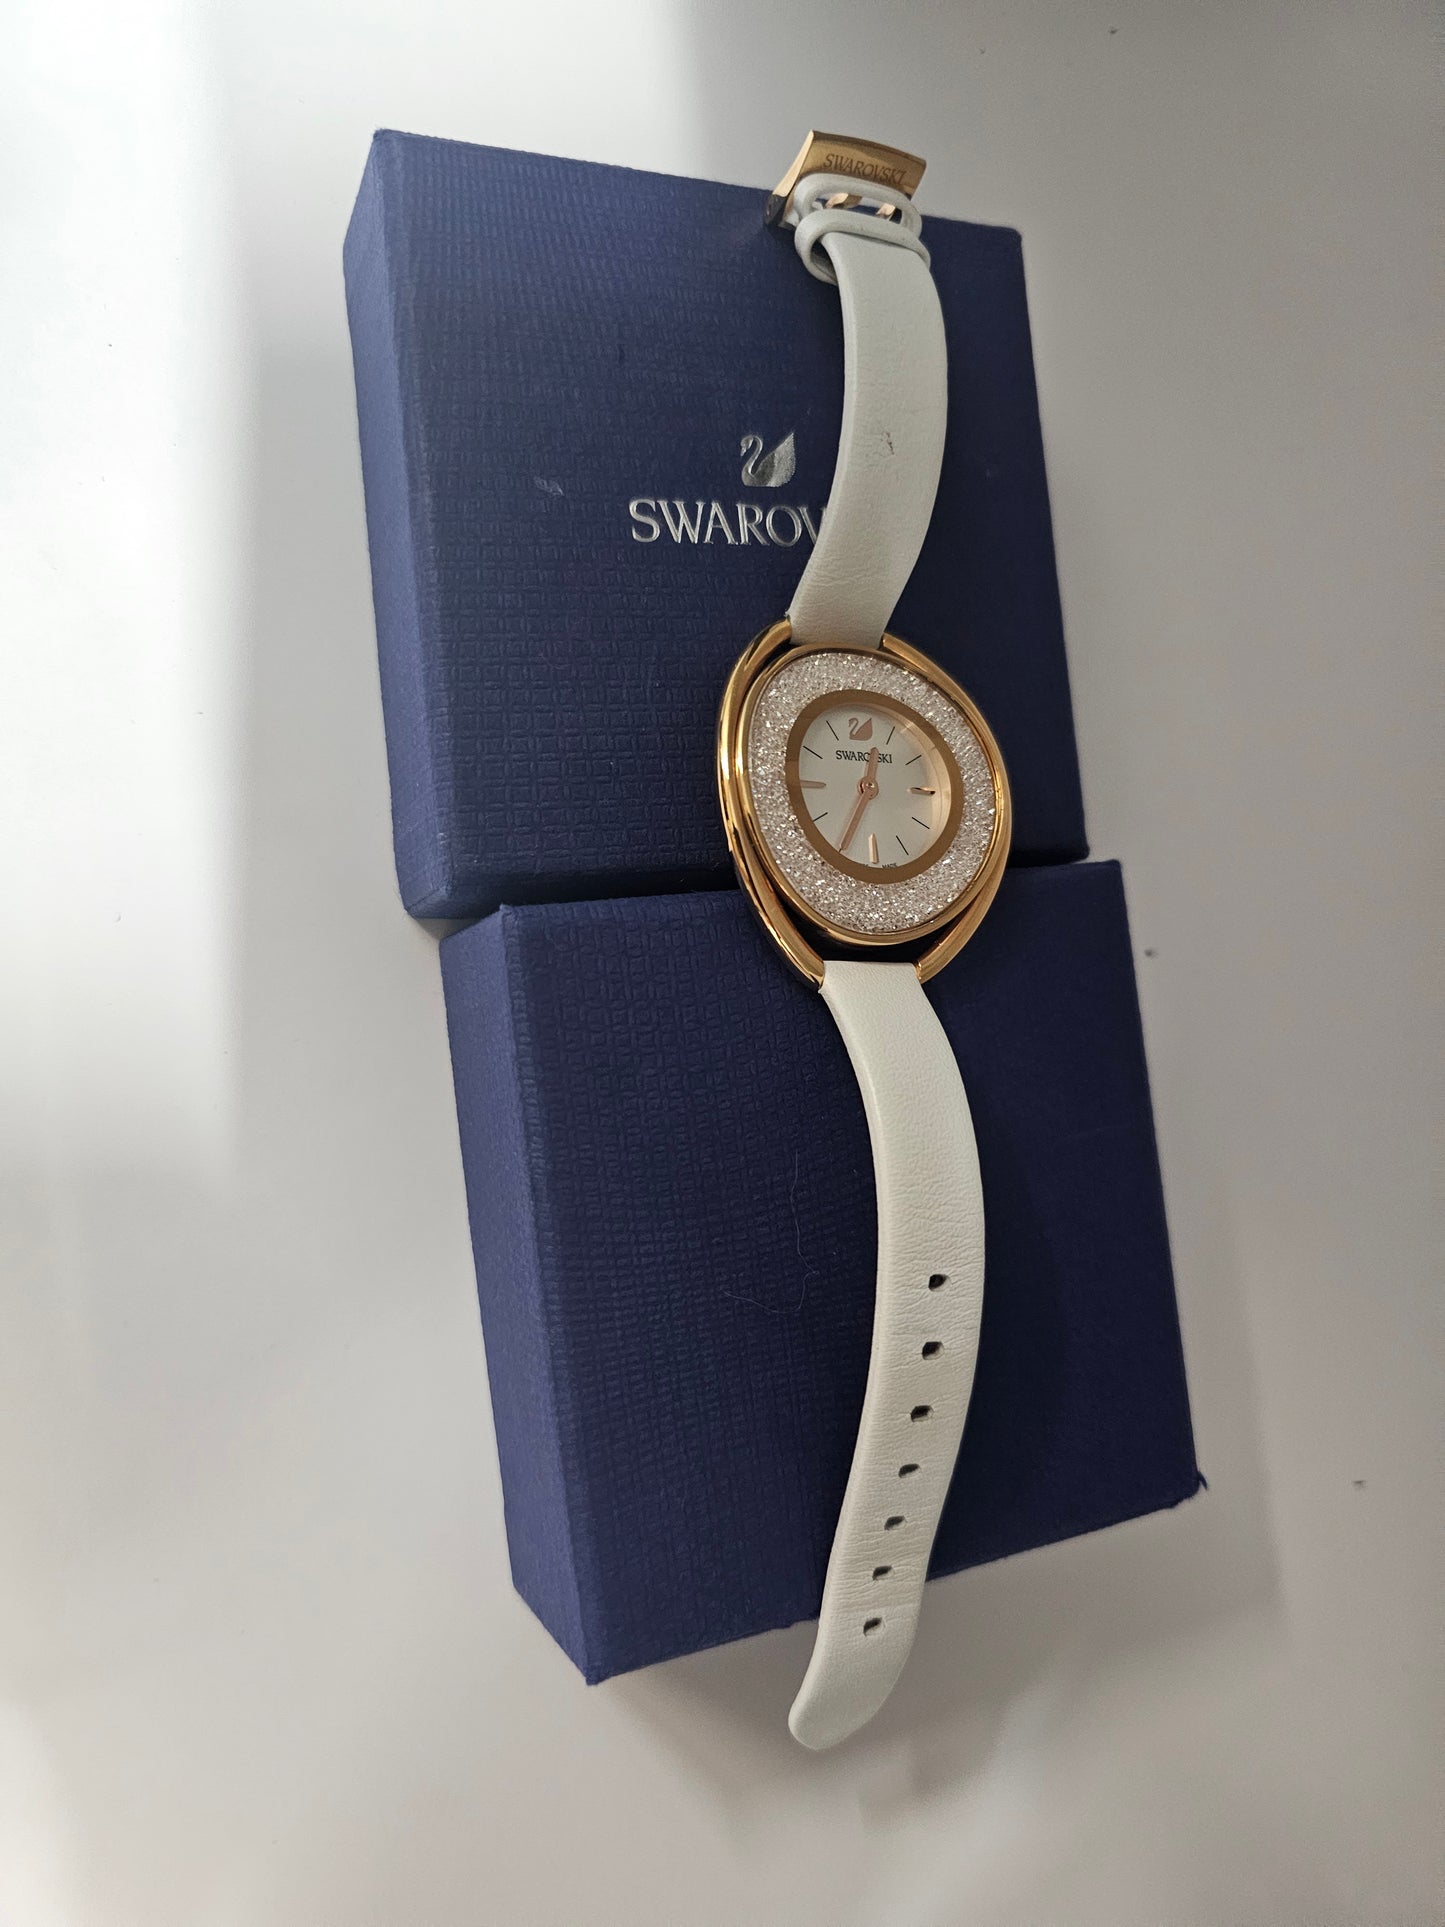 Swarovski crystalline watch